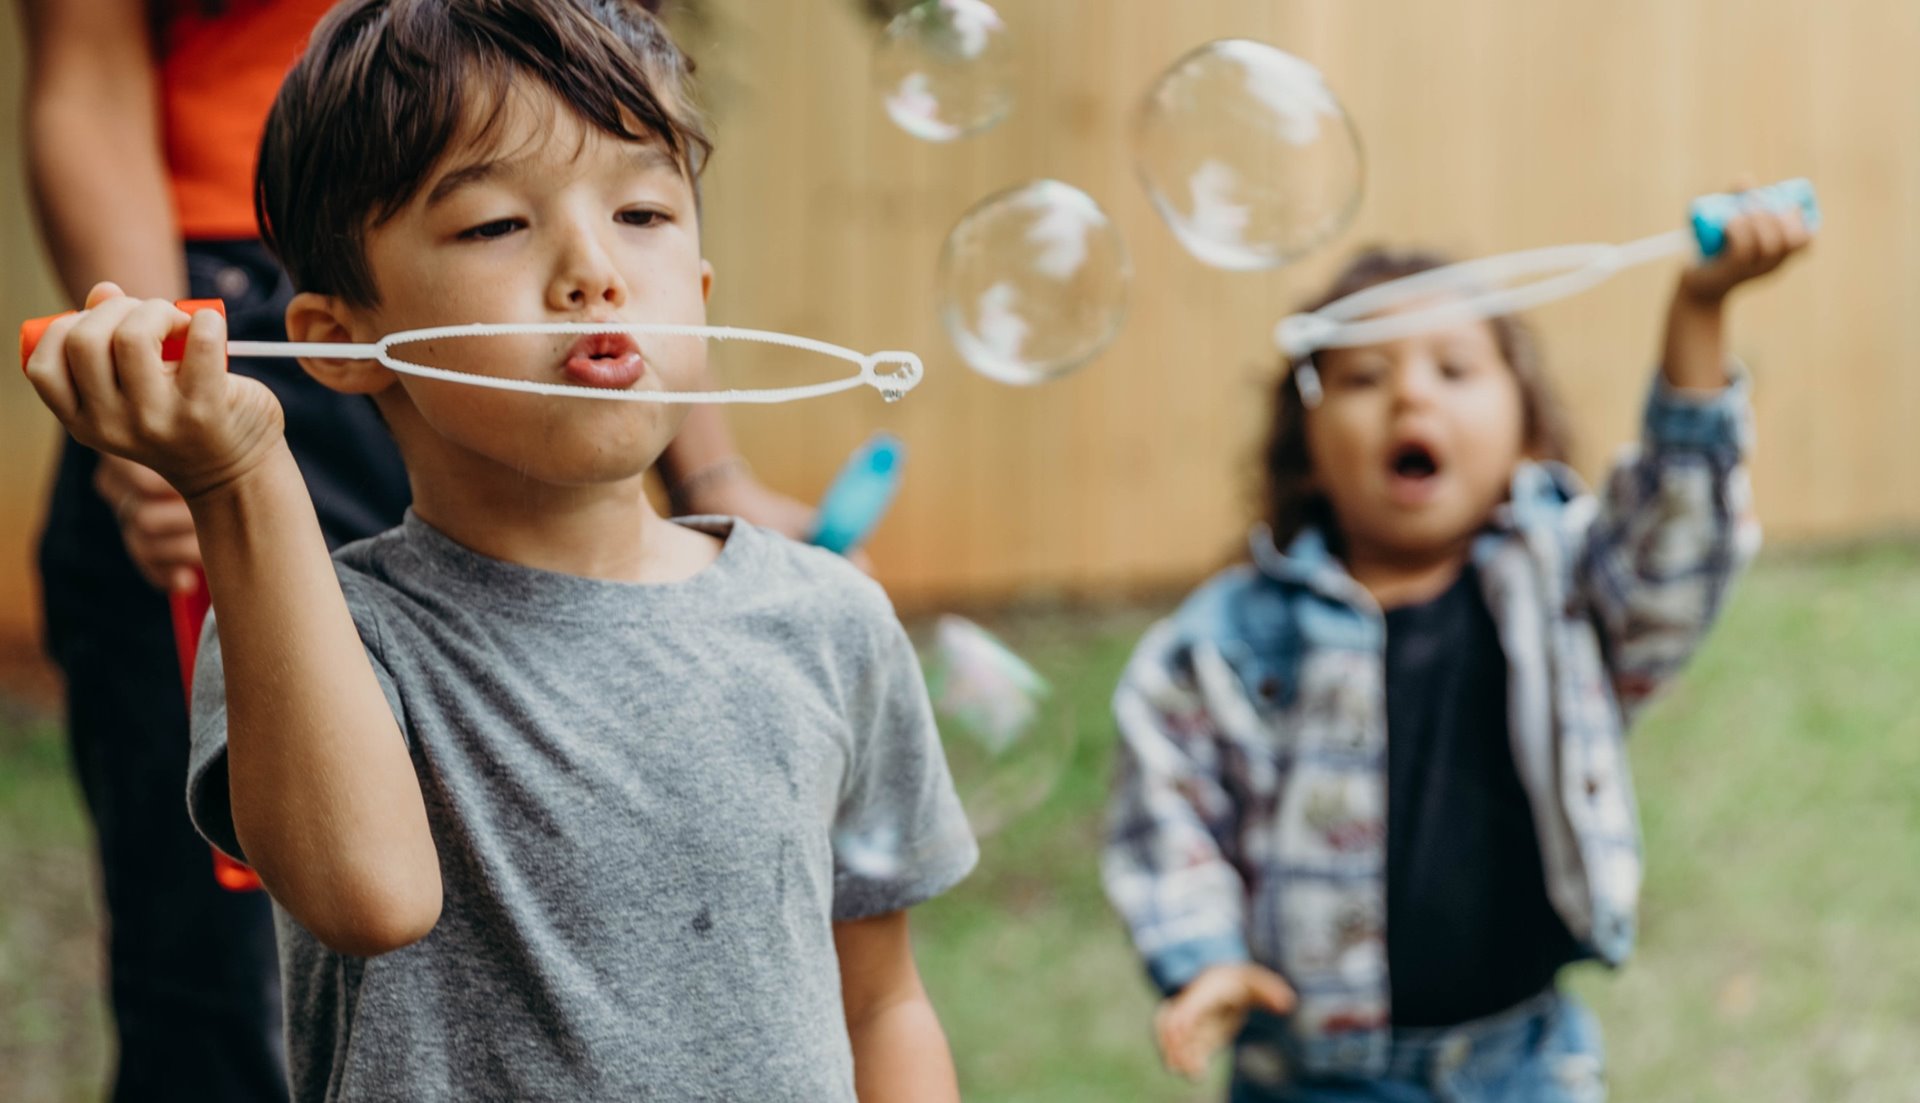 Kids blowing bubbles using bubble wands